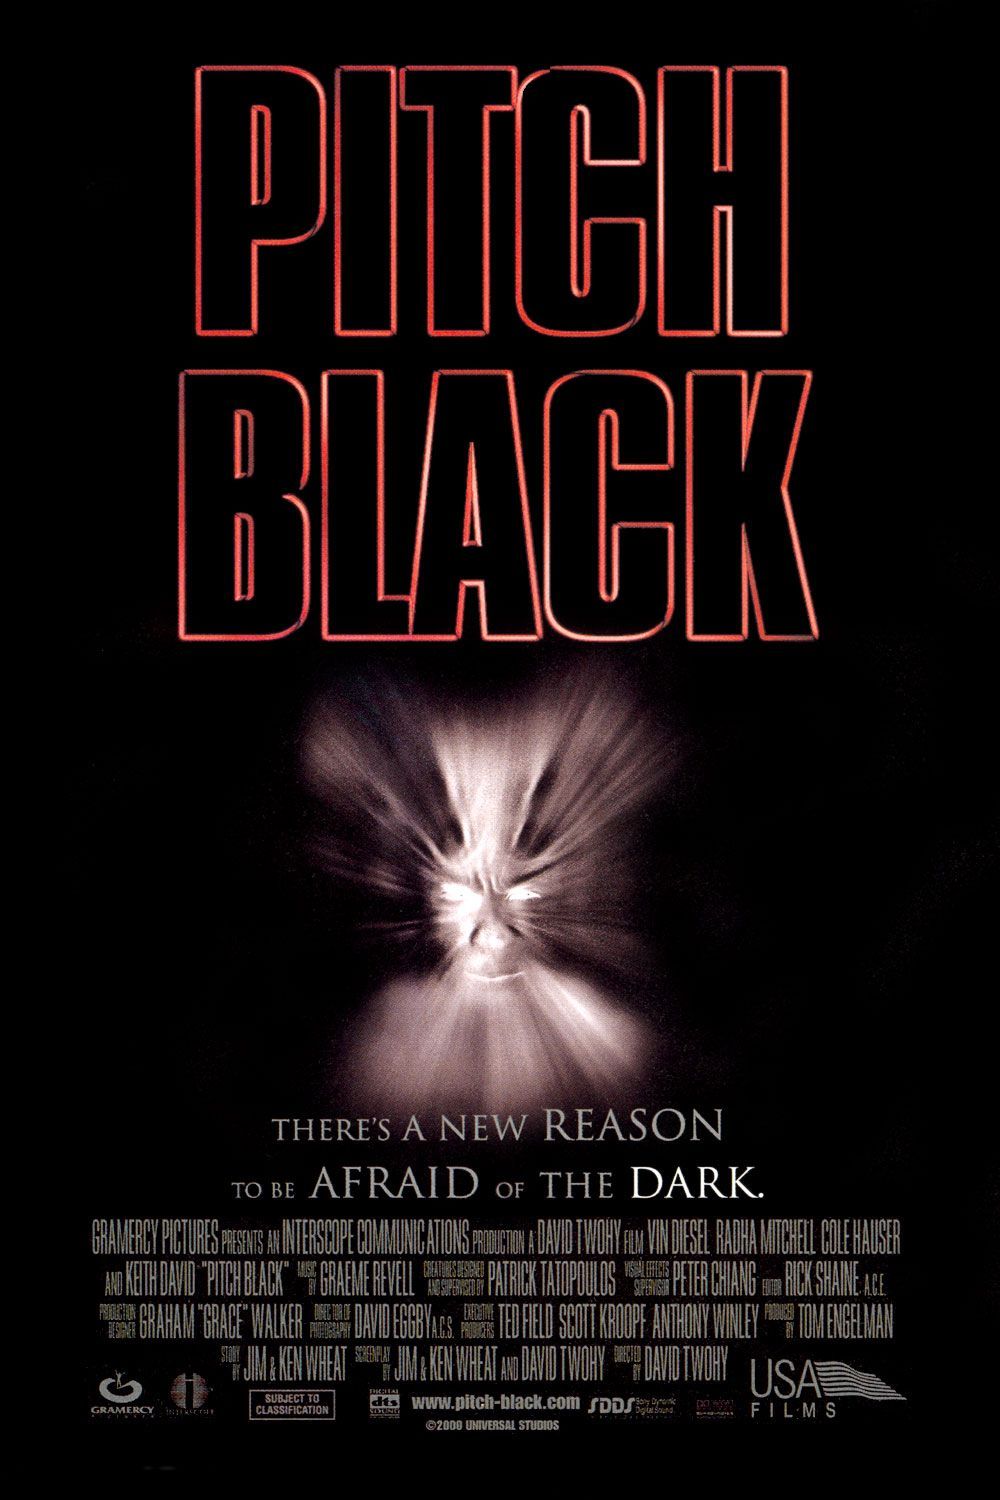 pitch black poster